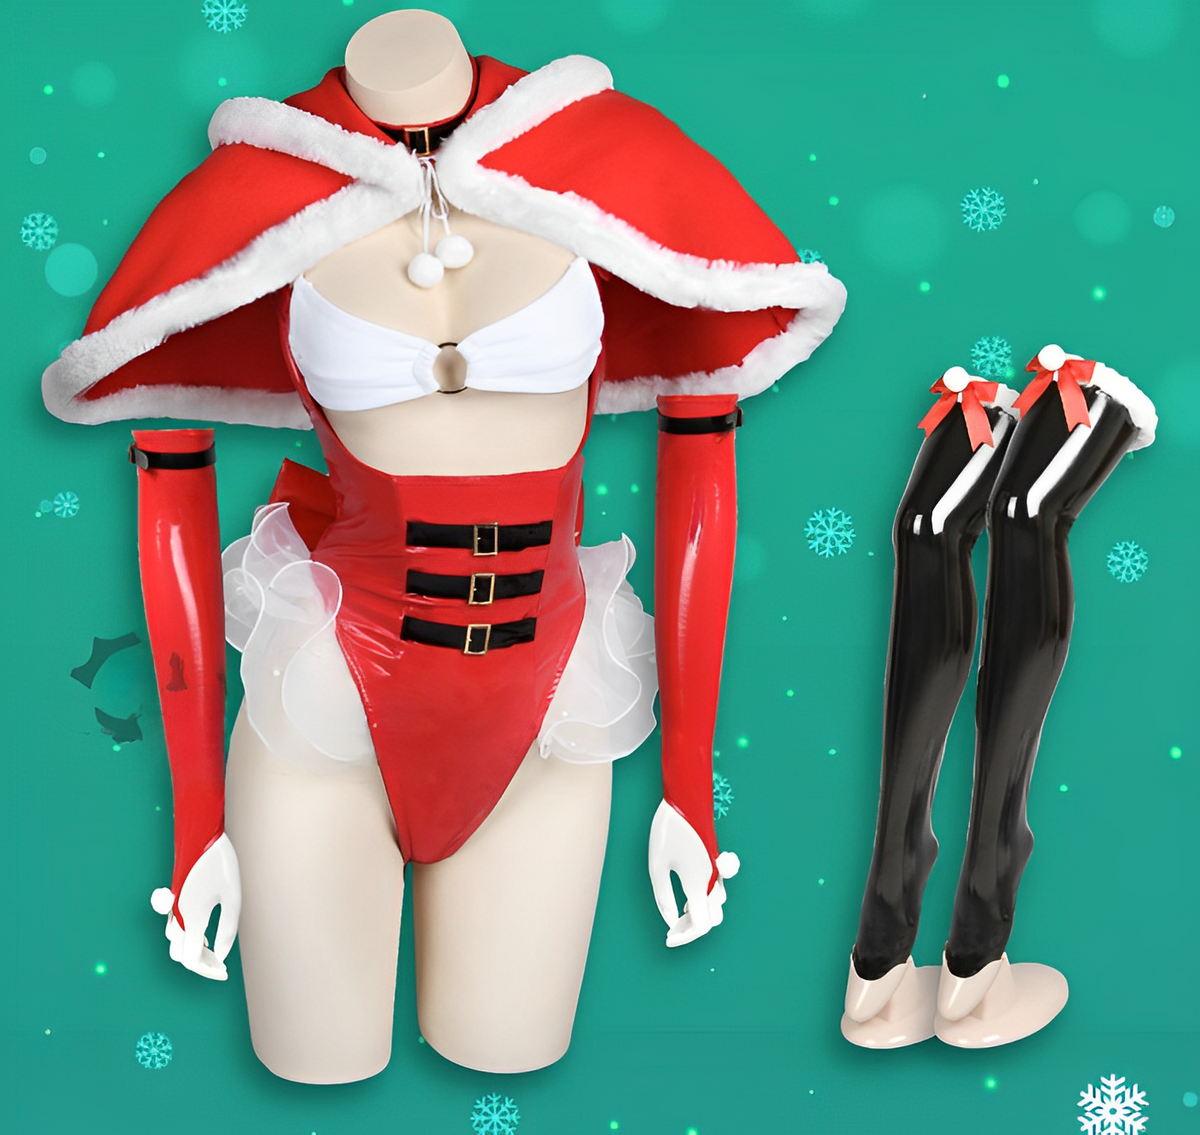 Soul Snatch | "Stuff my Stockings" Christmas Costume